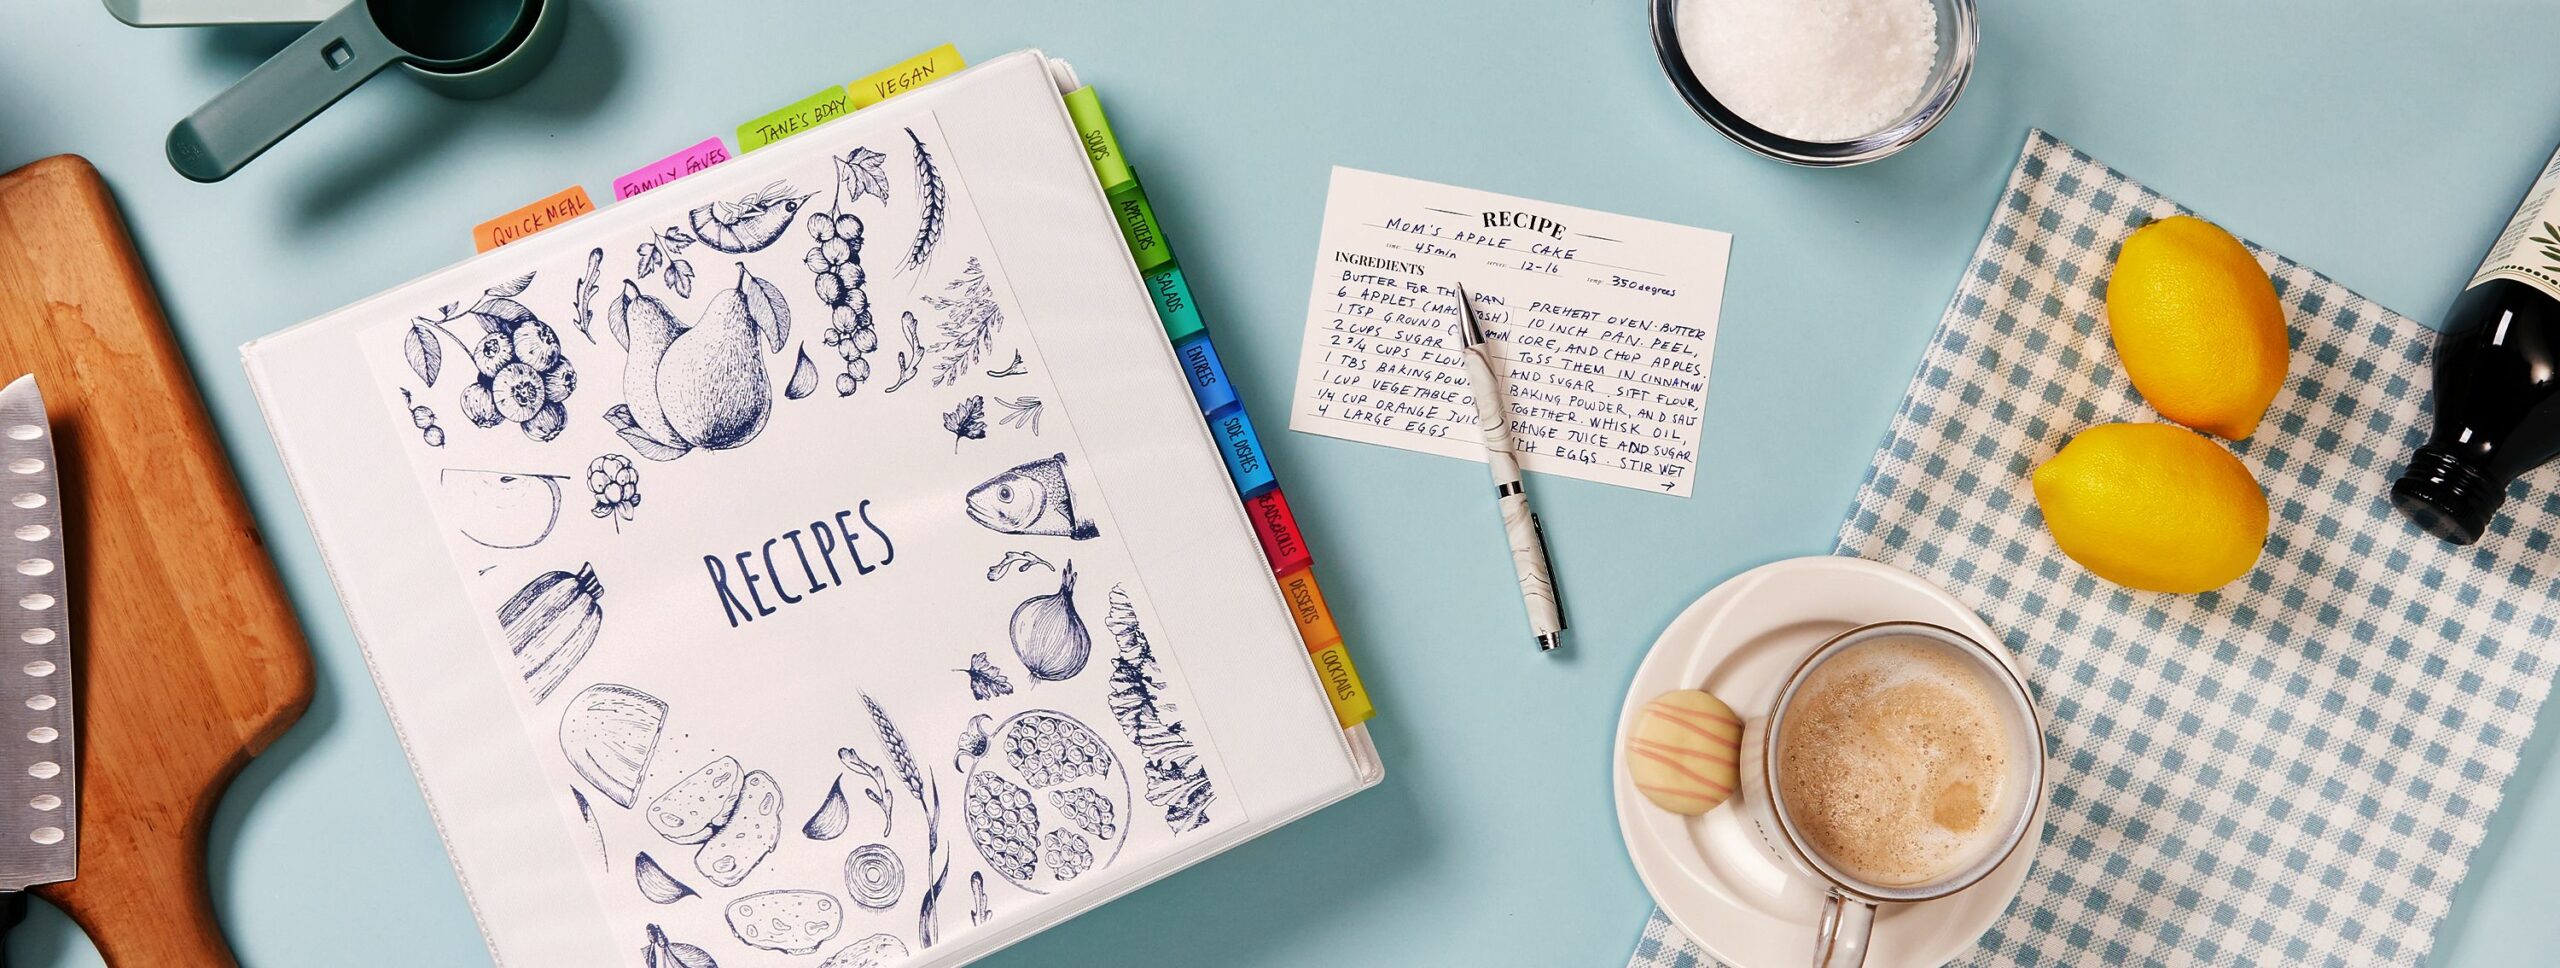 Custom Large Recipe book binders Create your own cookbook